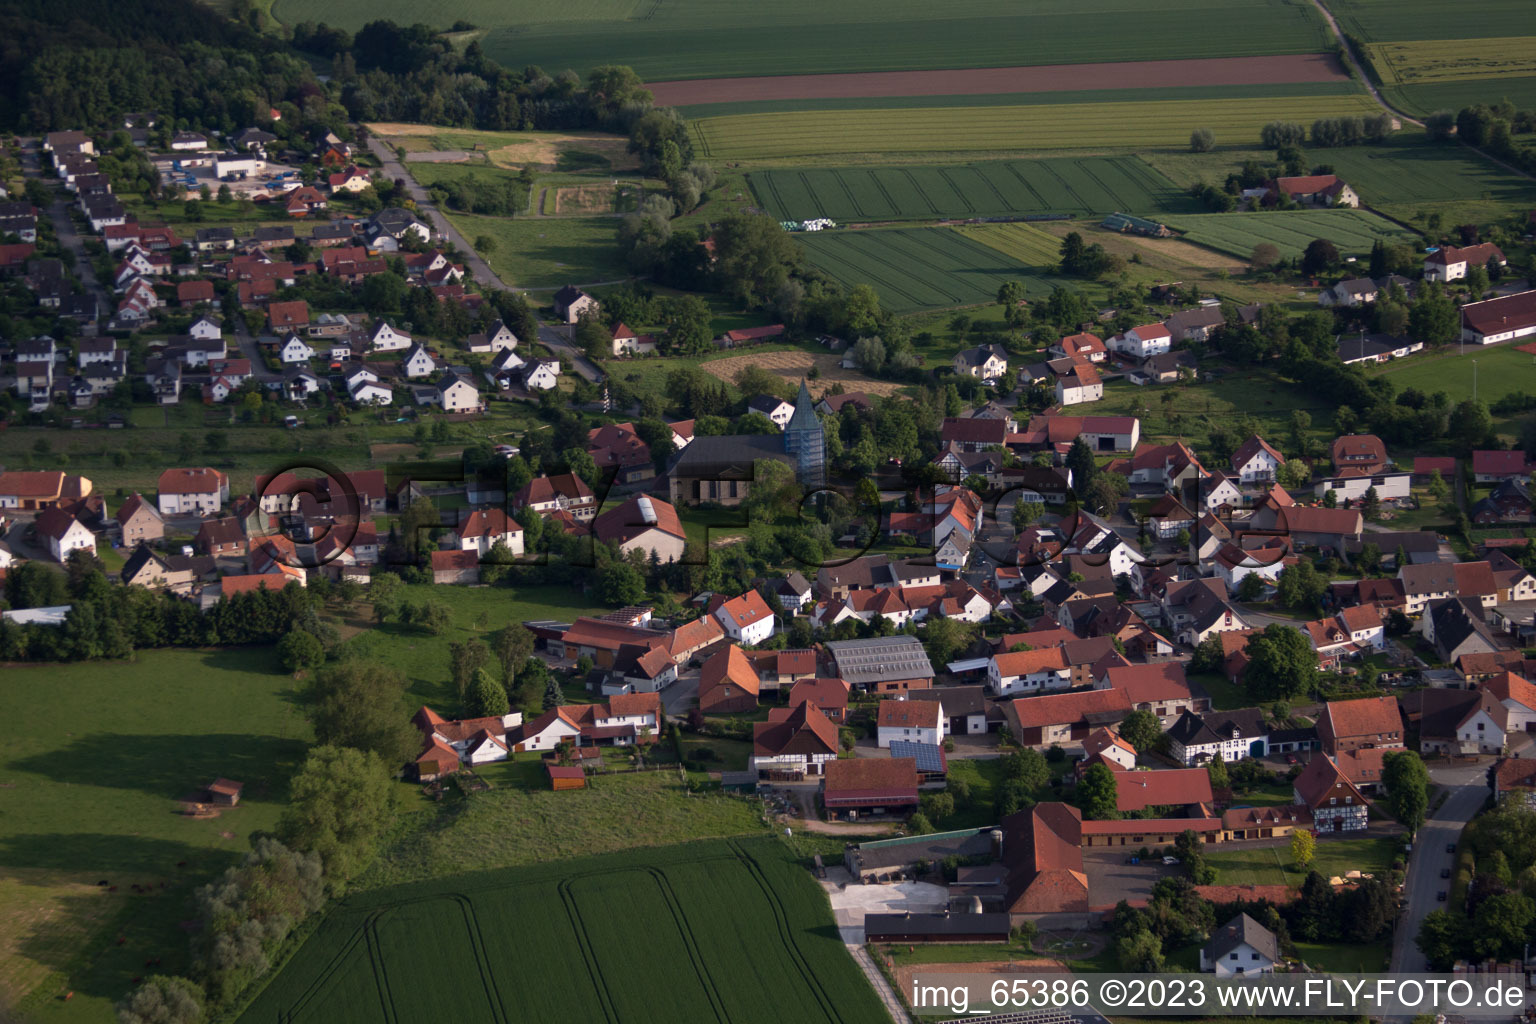 Aerial view of Bühne in the state North Rhine-Westphalia, Germany